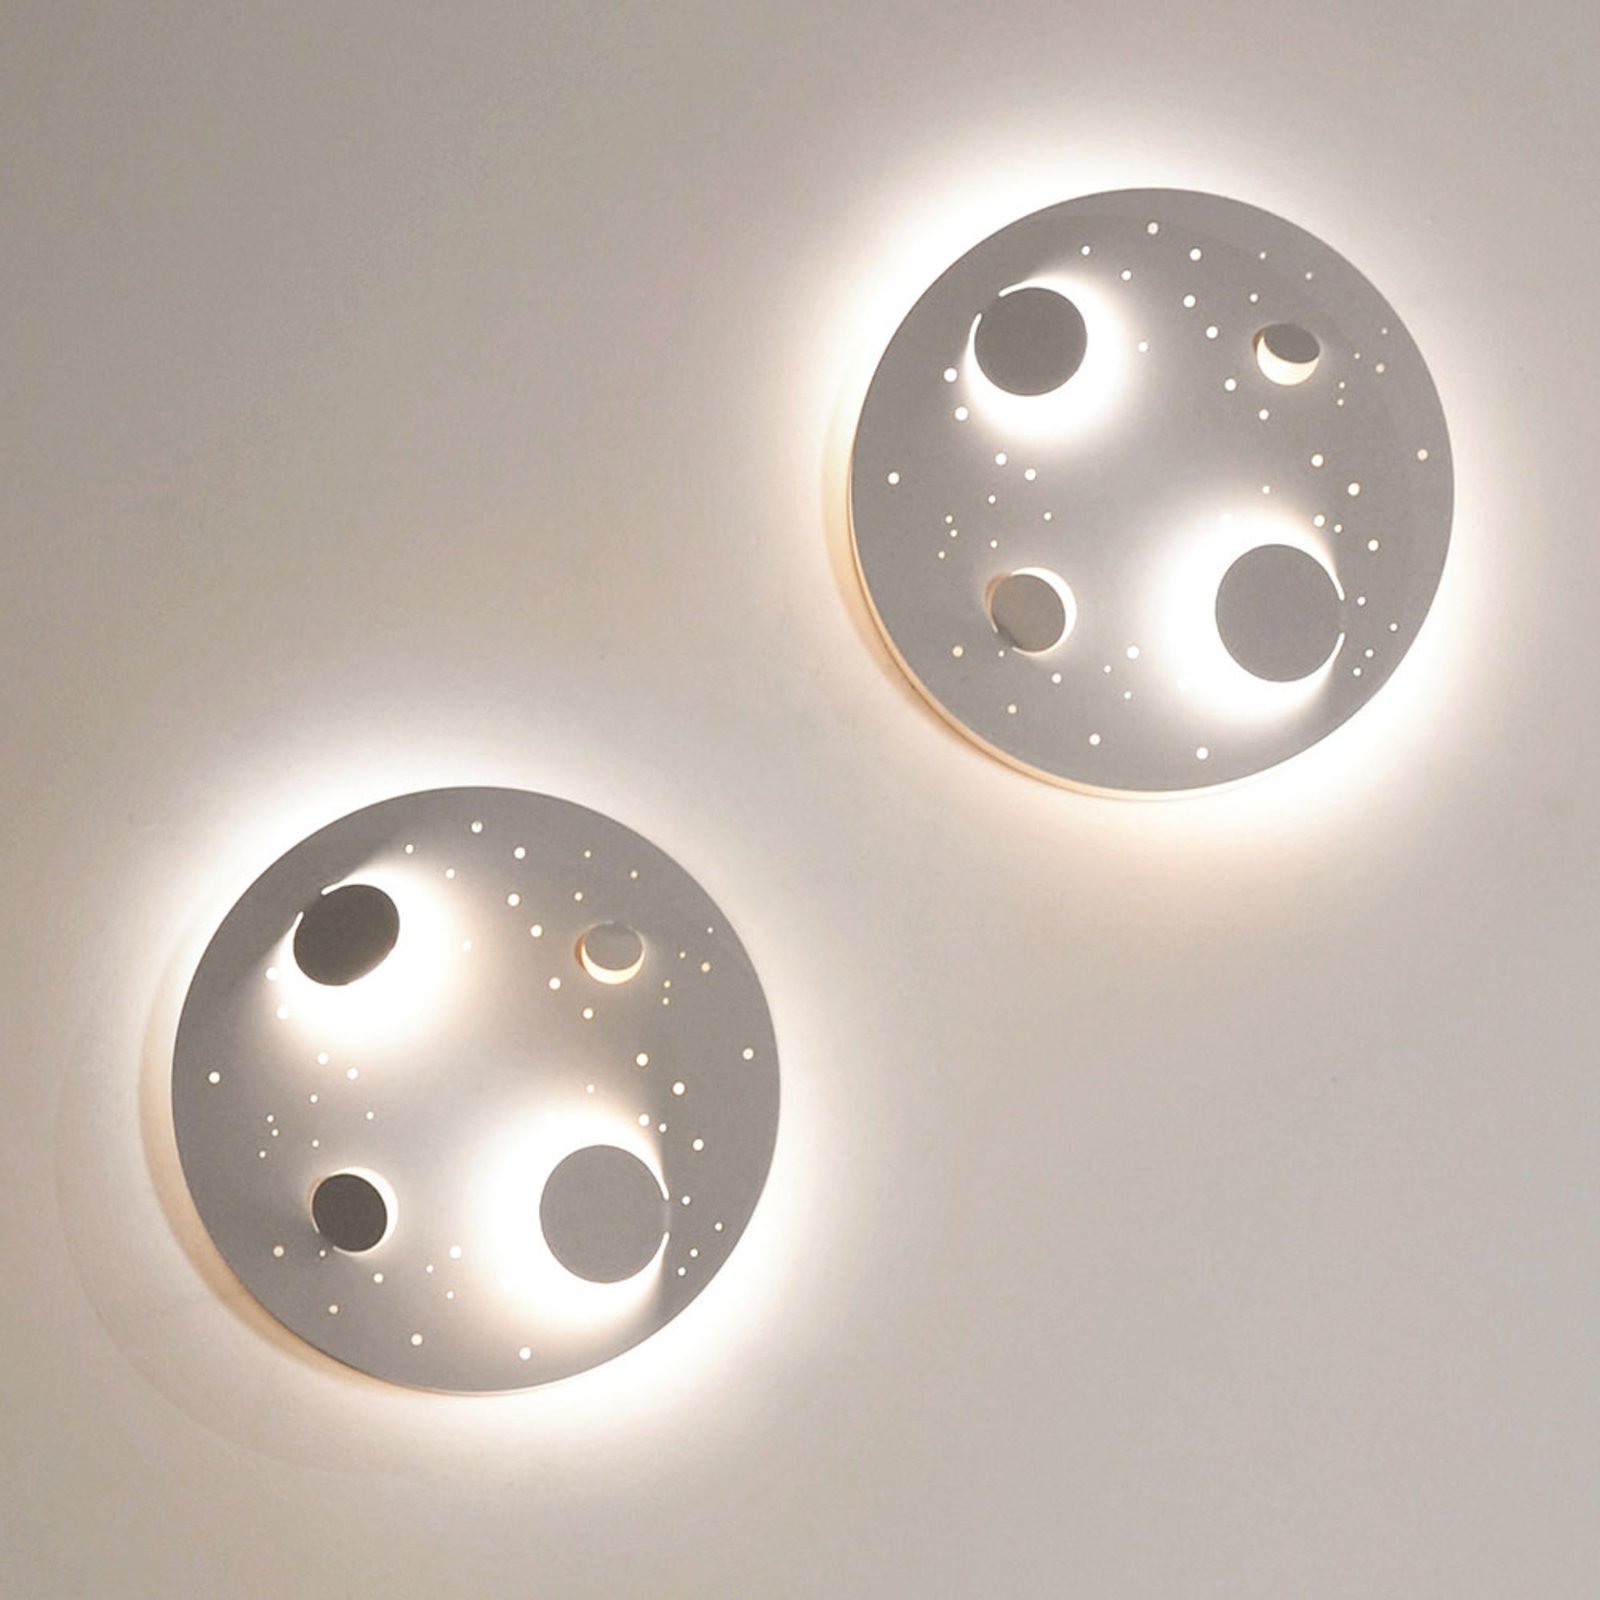 Knikerboker Buchi LED-Wandlampe Ø 40cm weiß